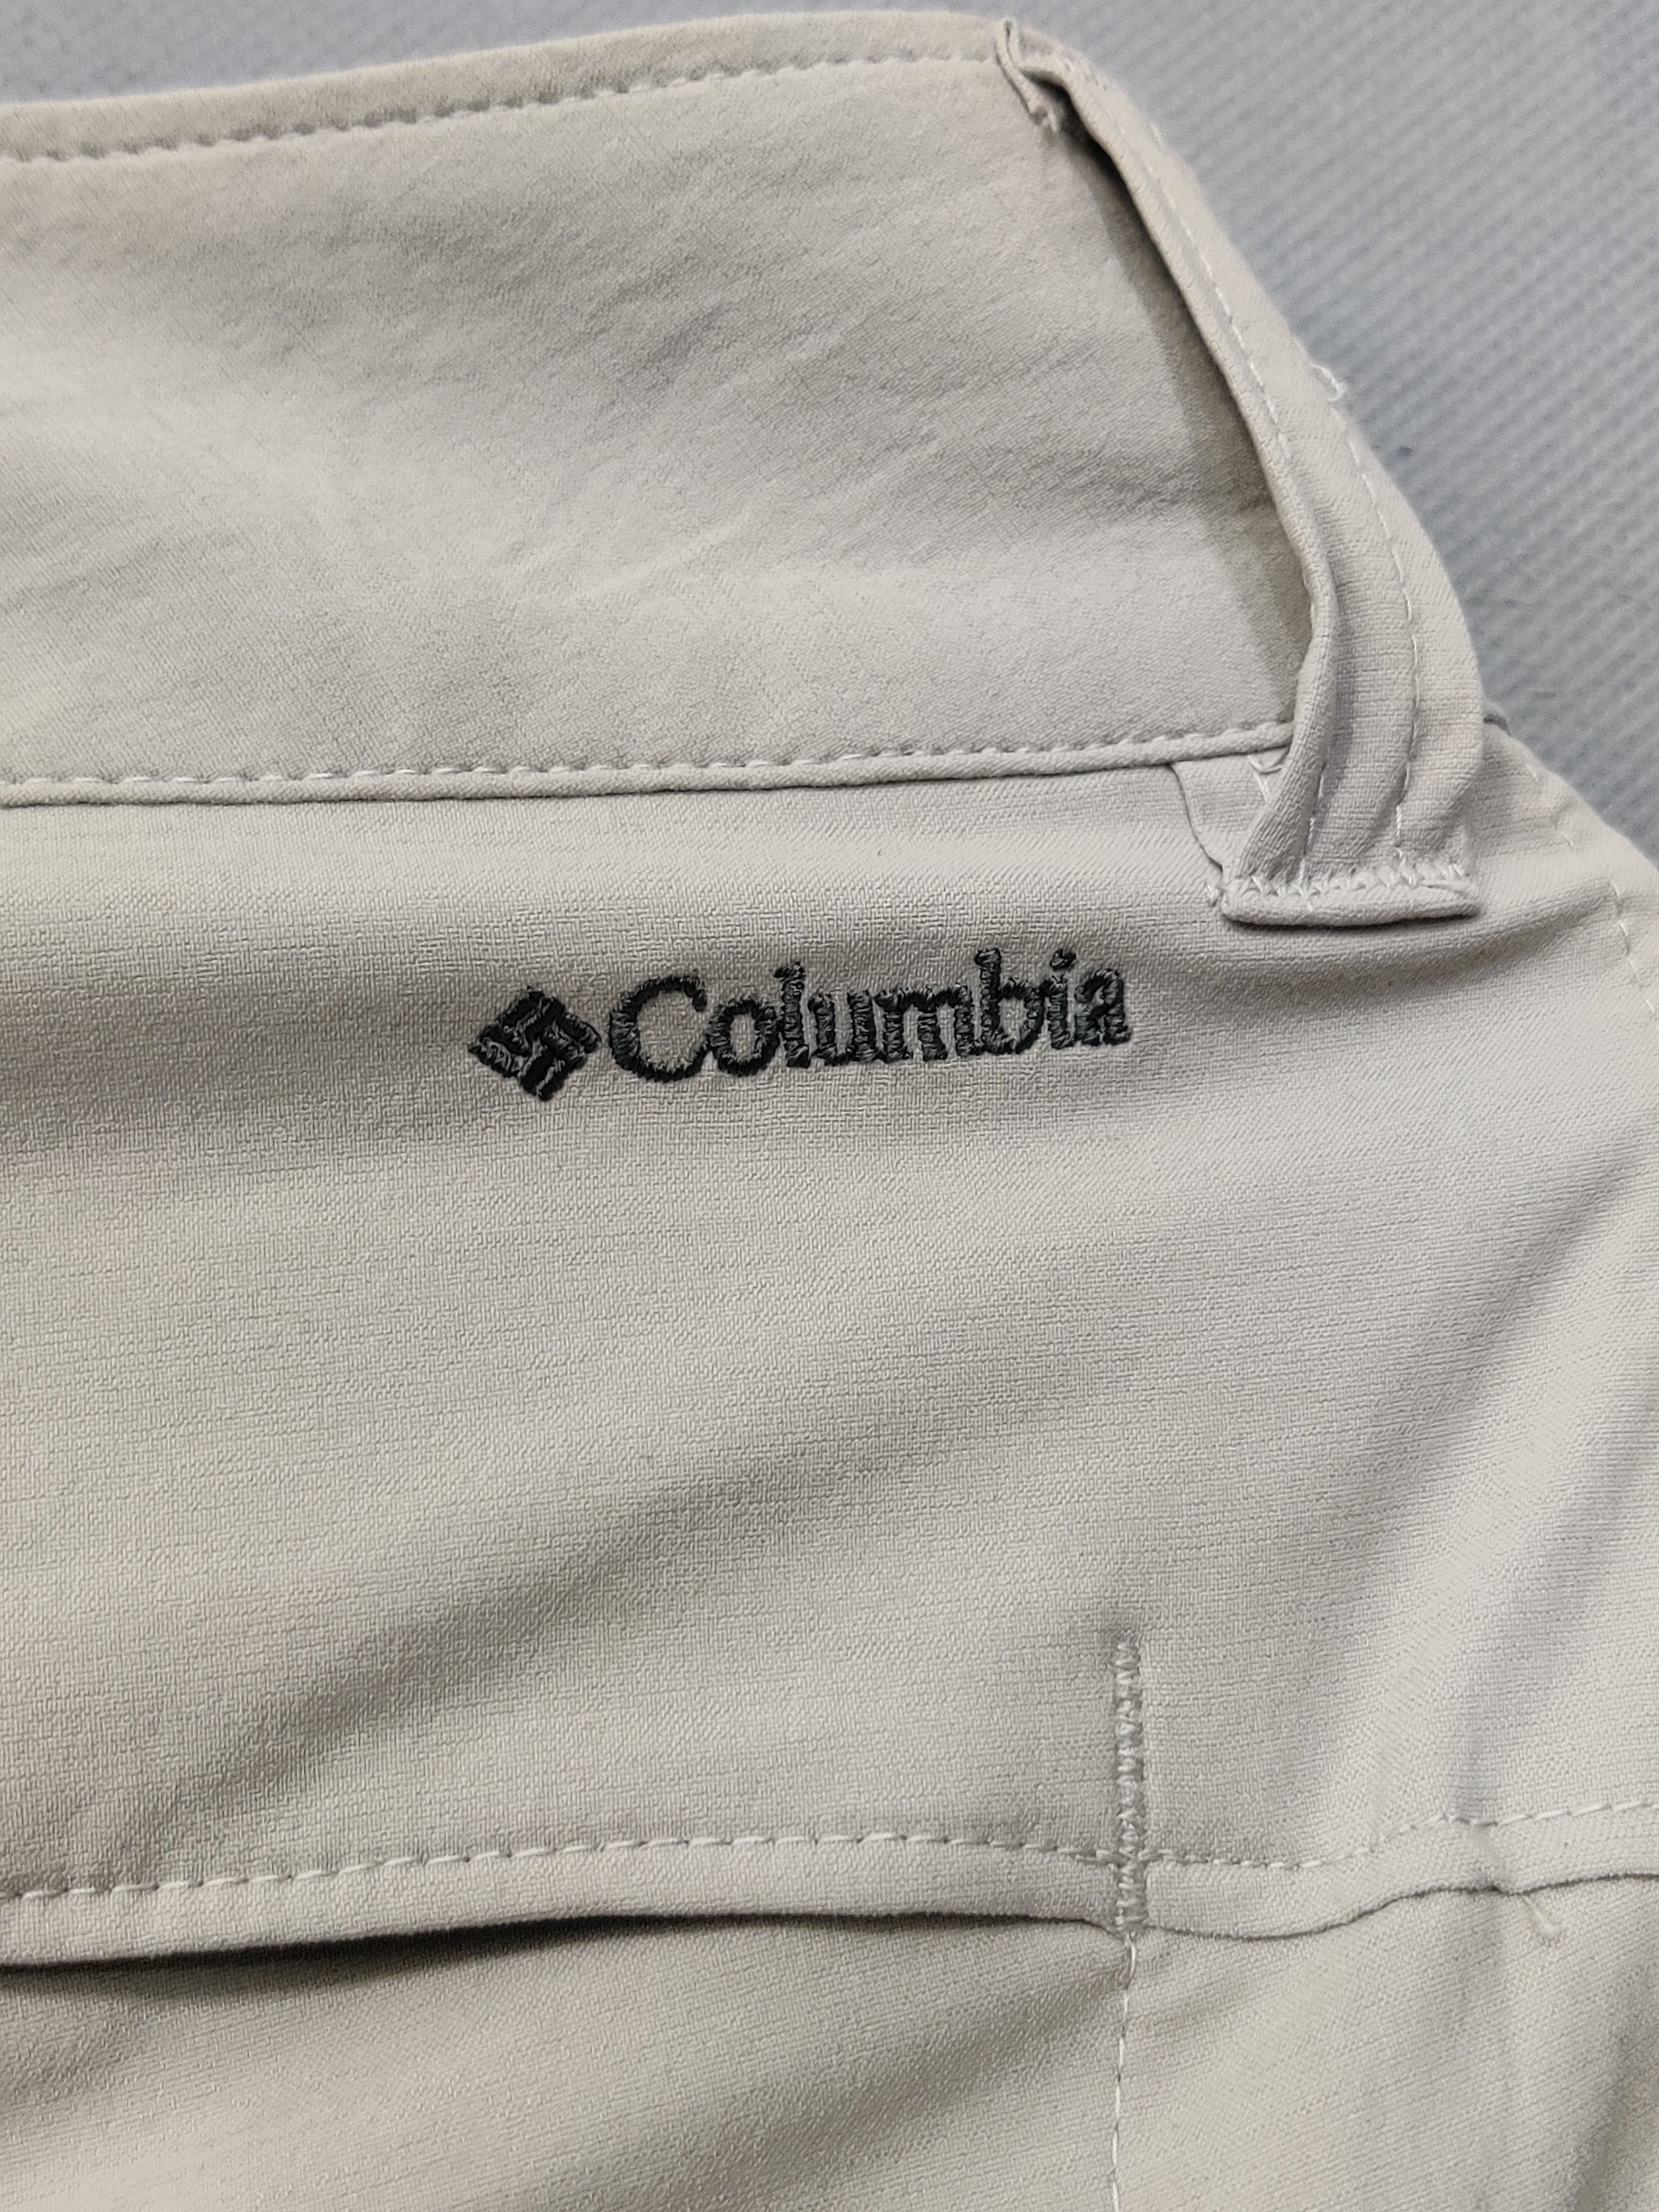 Columbia Branded Original Cotton Short For Men